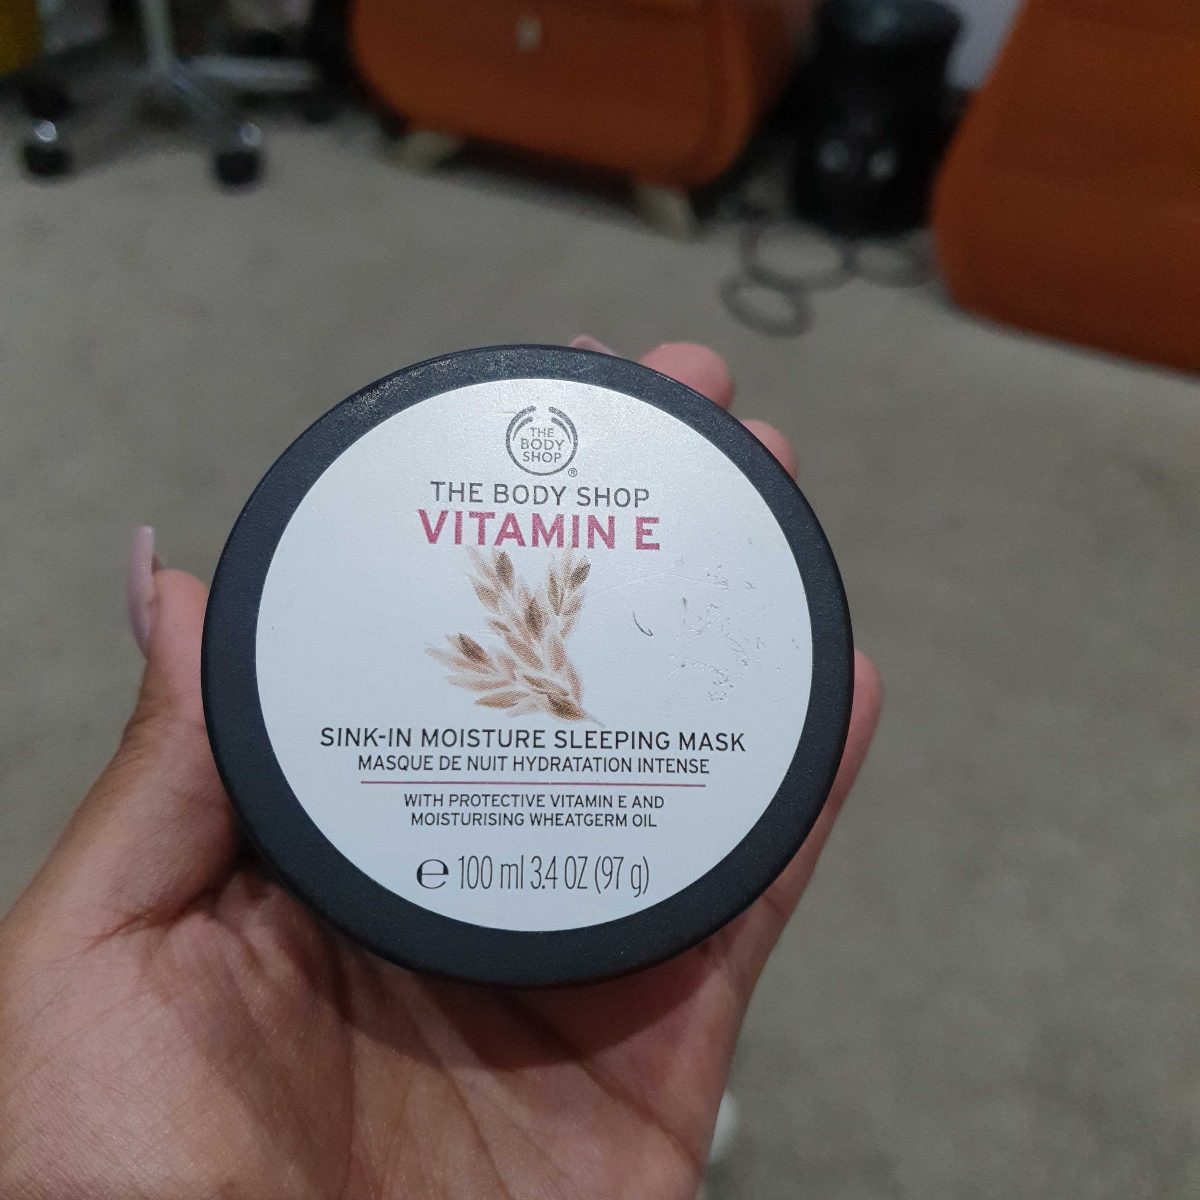 Uafhængig revidere Miniature The Body Shop Vitamin E moisture sleeping mask Reviews | abillion